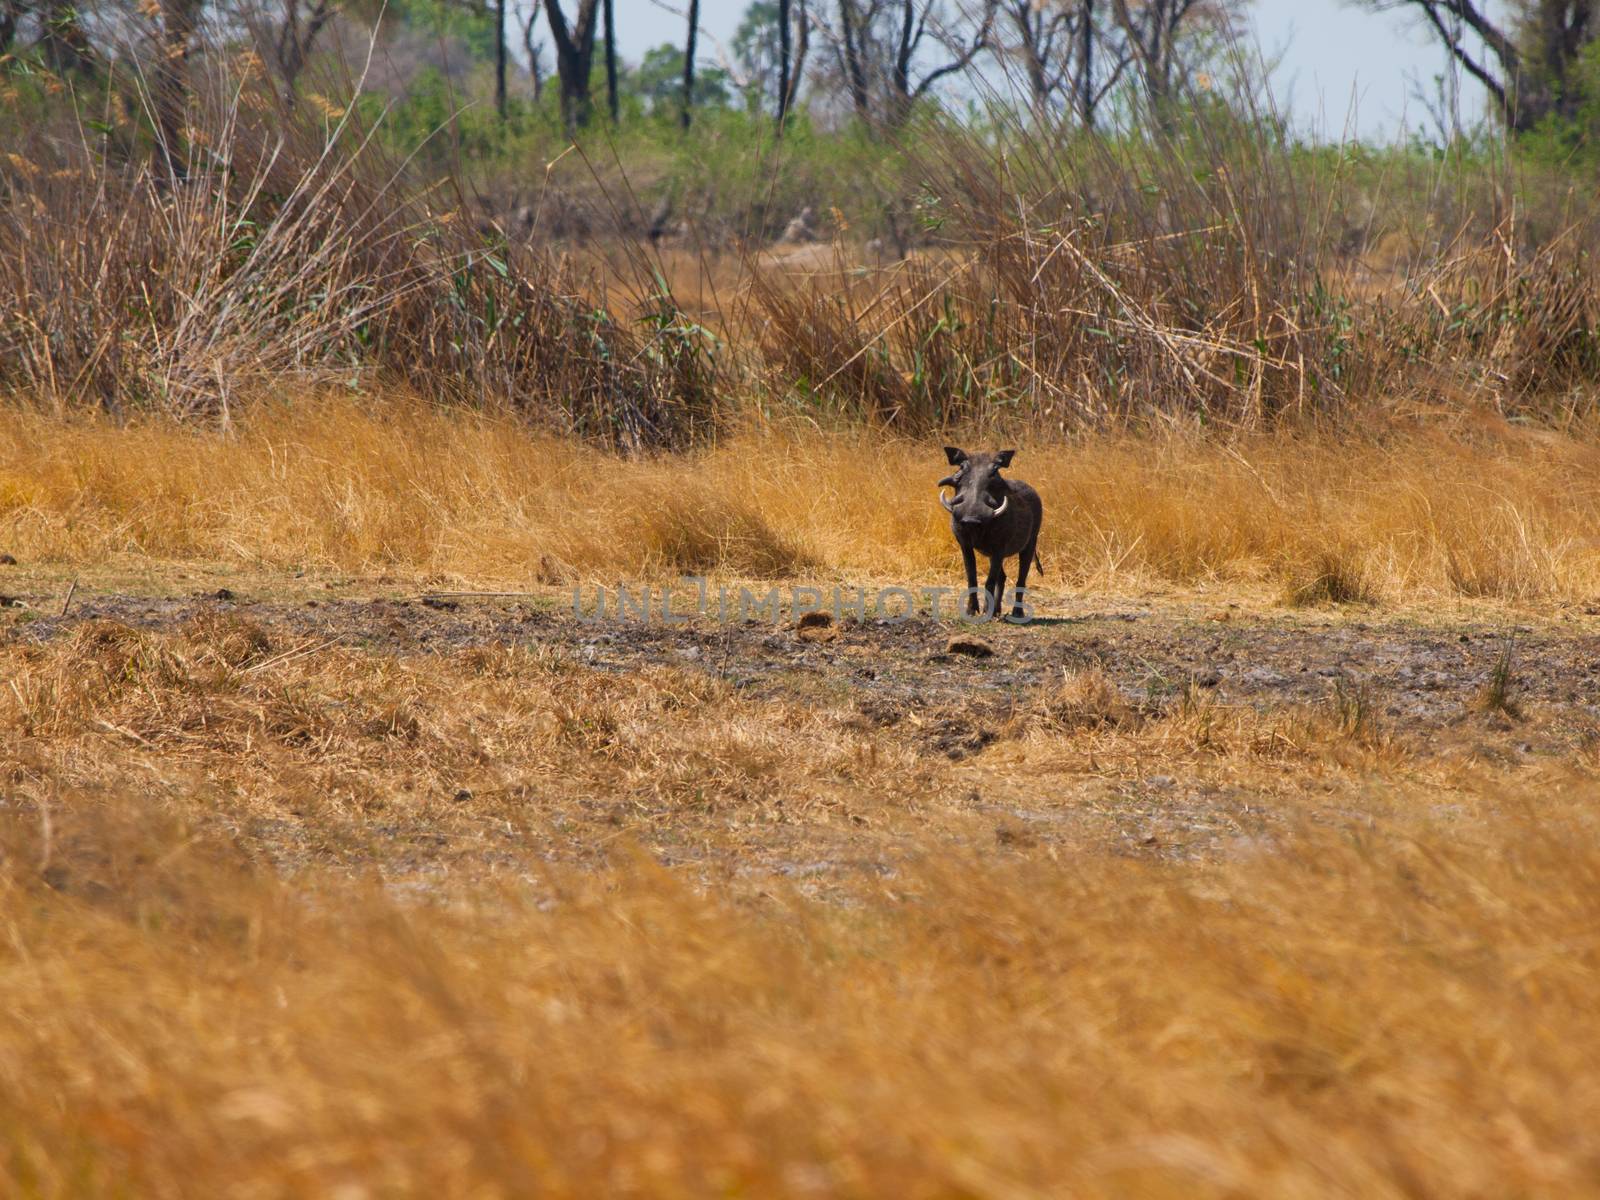 Warthog in savanna (Phacochoerus africanus) by pyty